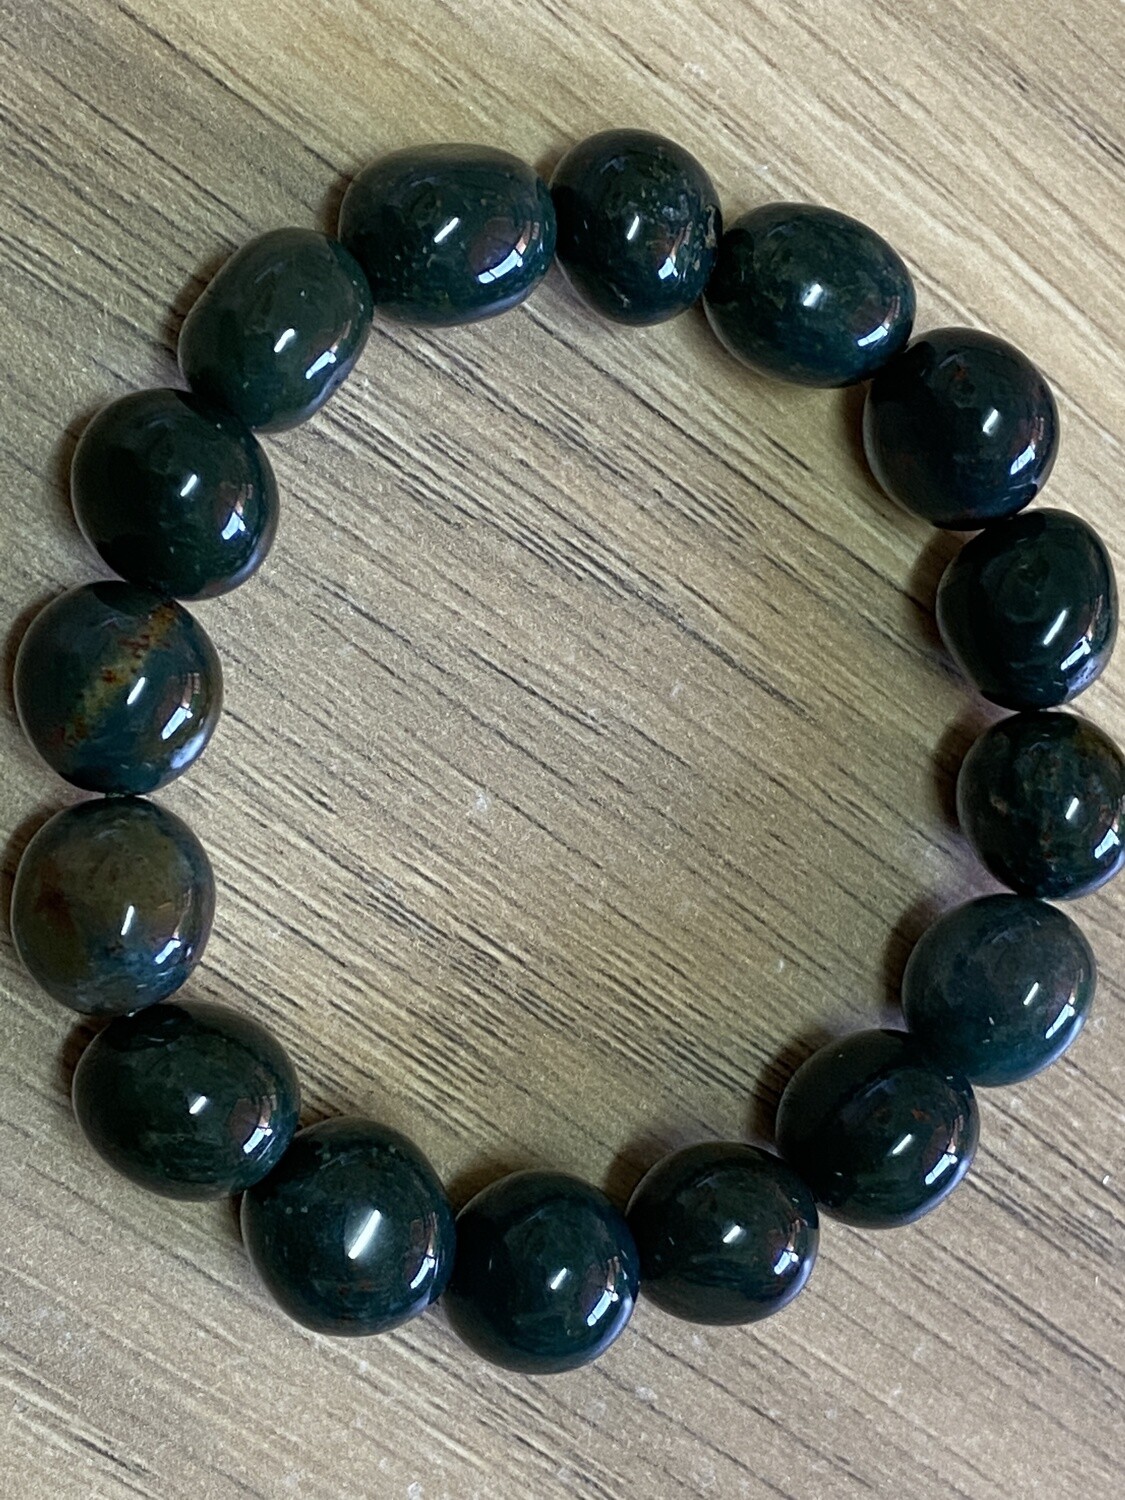 Bloodstone (Heliotrope) bead bracelet